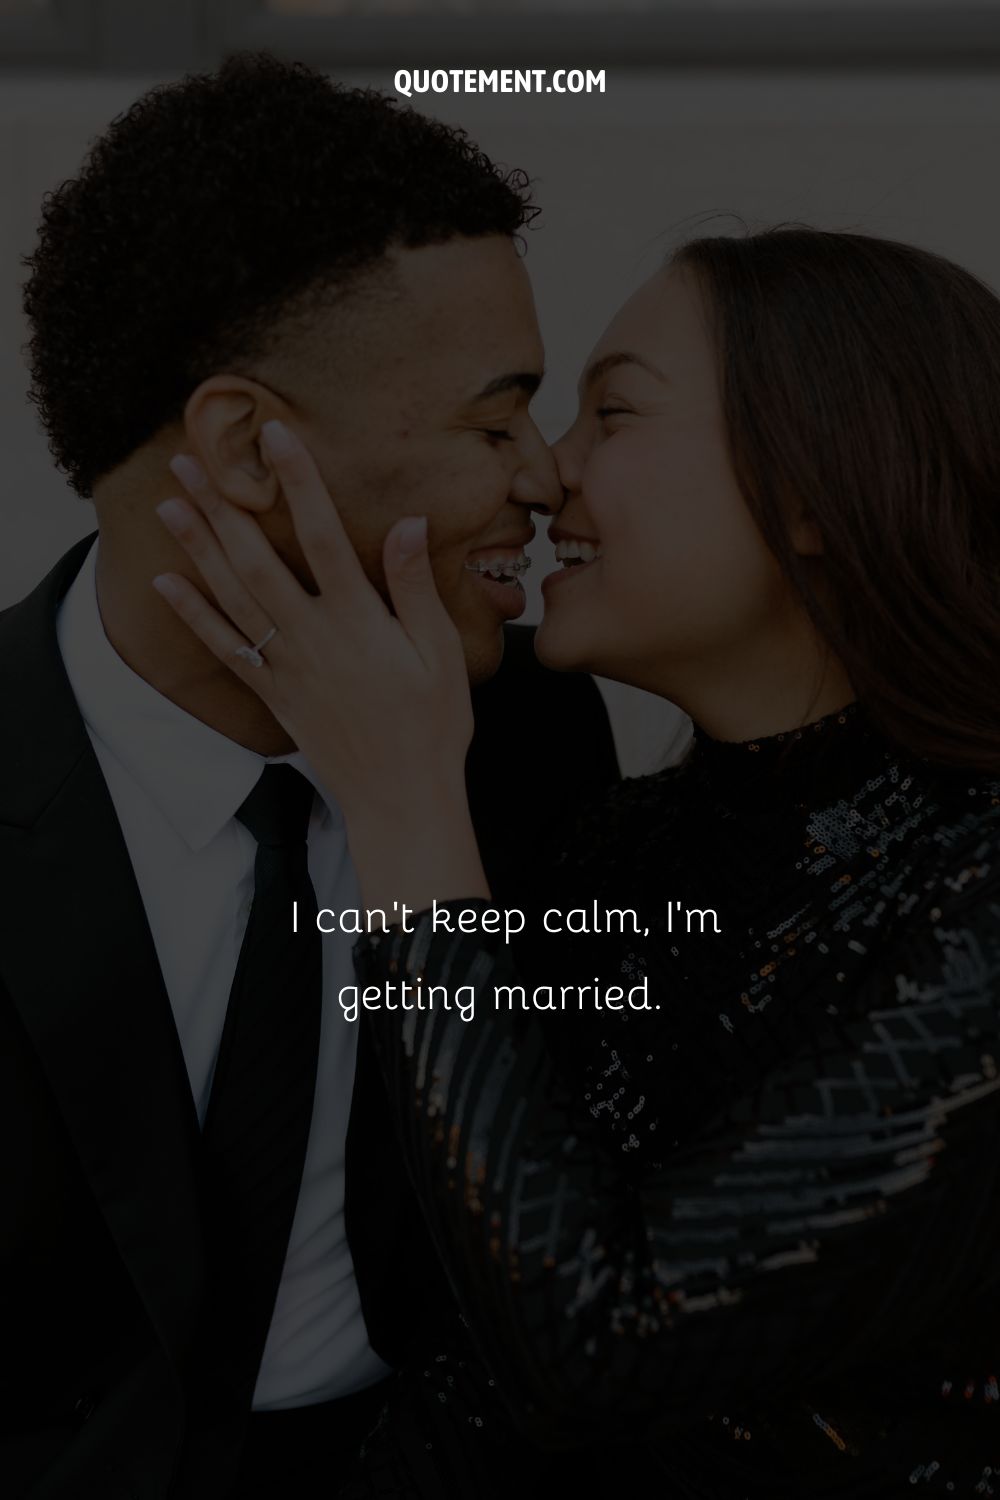 I can’t keep calm, I’m getting married.